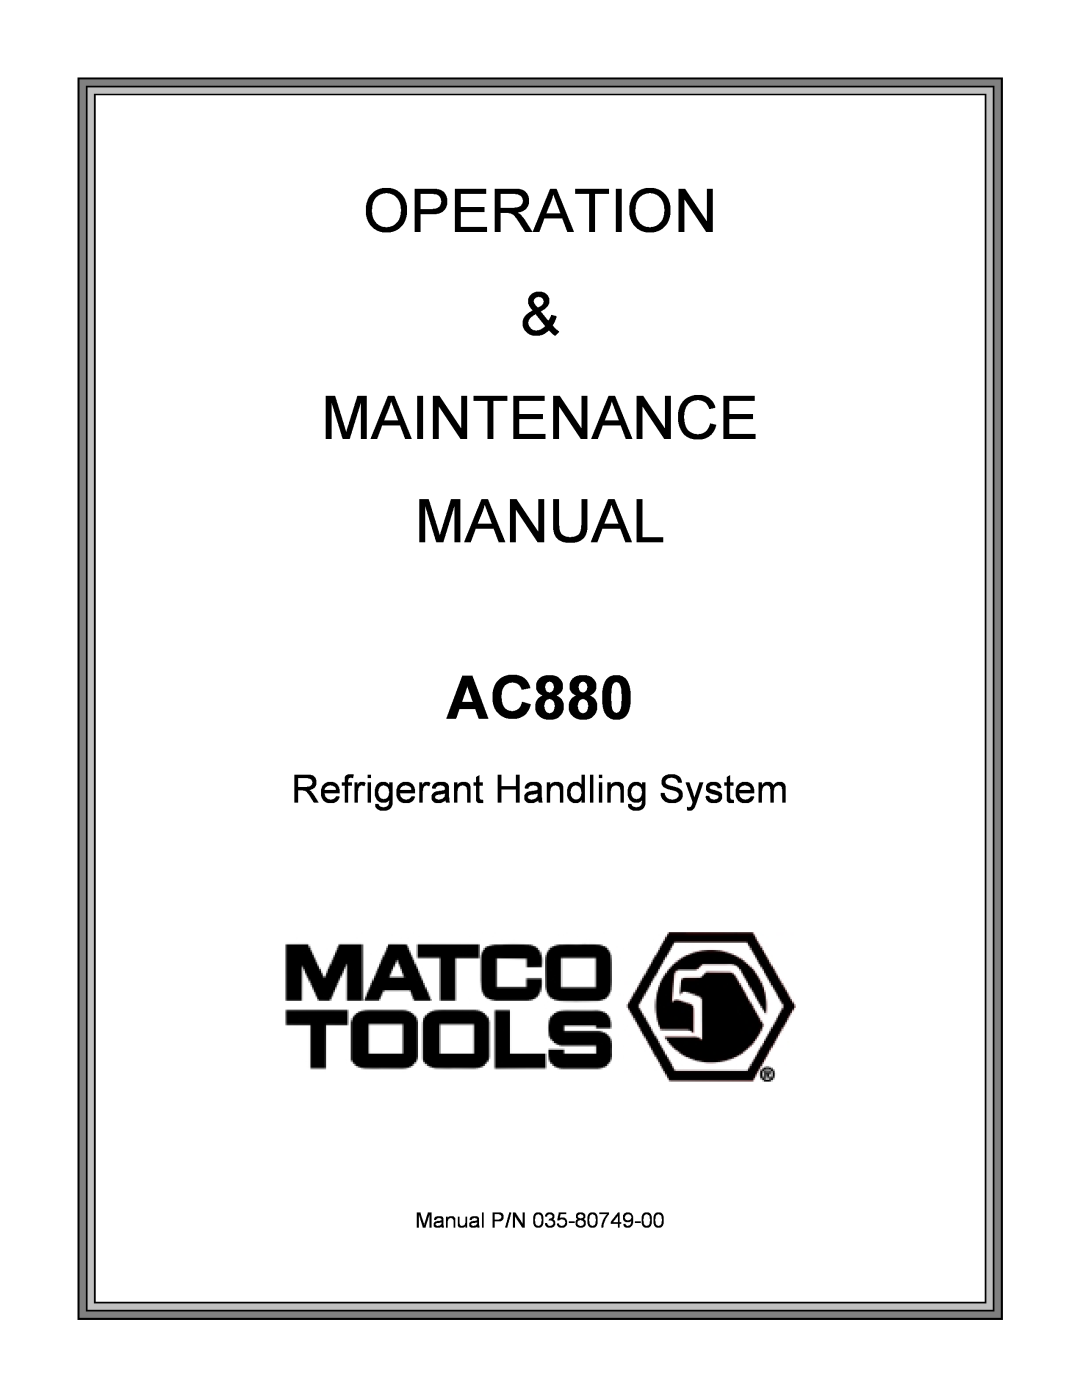 Sharp AC880 system manual Operation, Maintenance, Manual, Refrigerant Handling System 